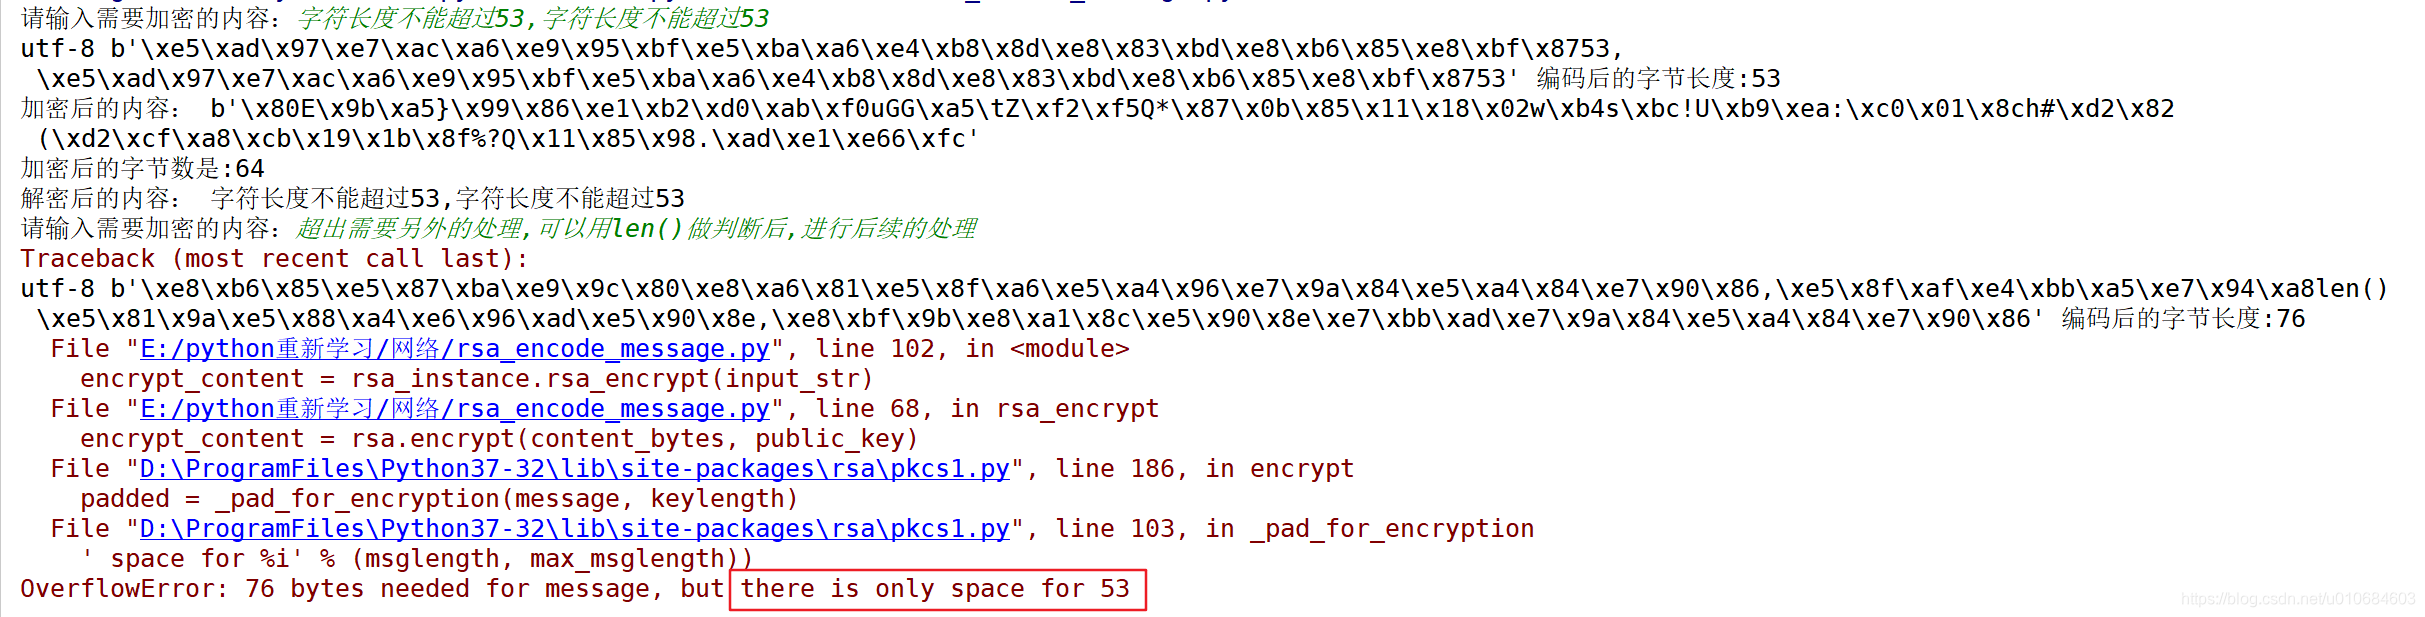 RSA encryption and decryption